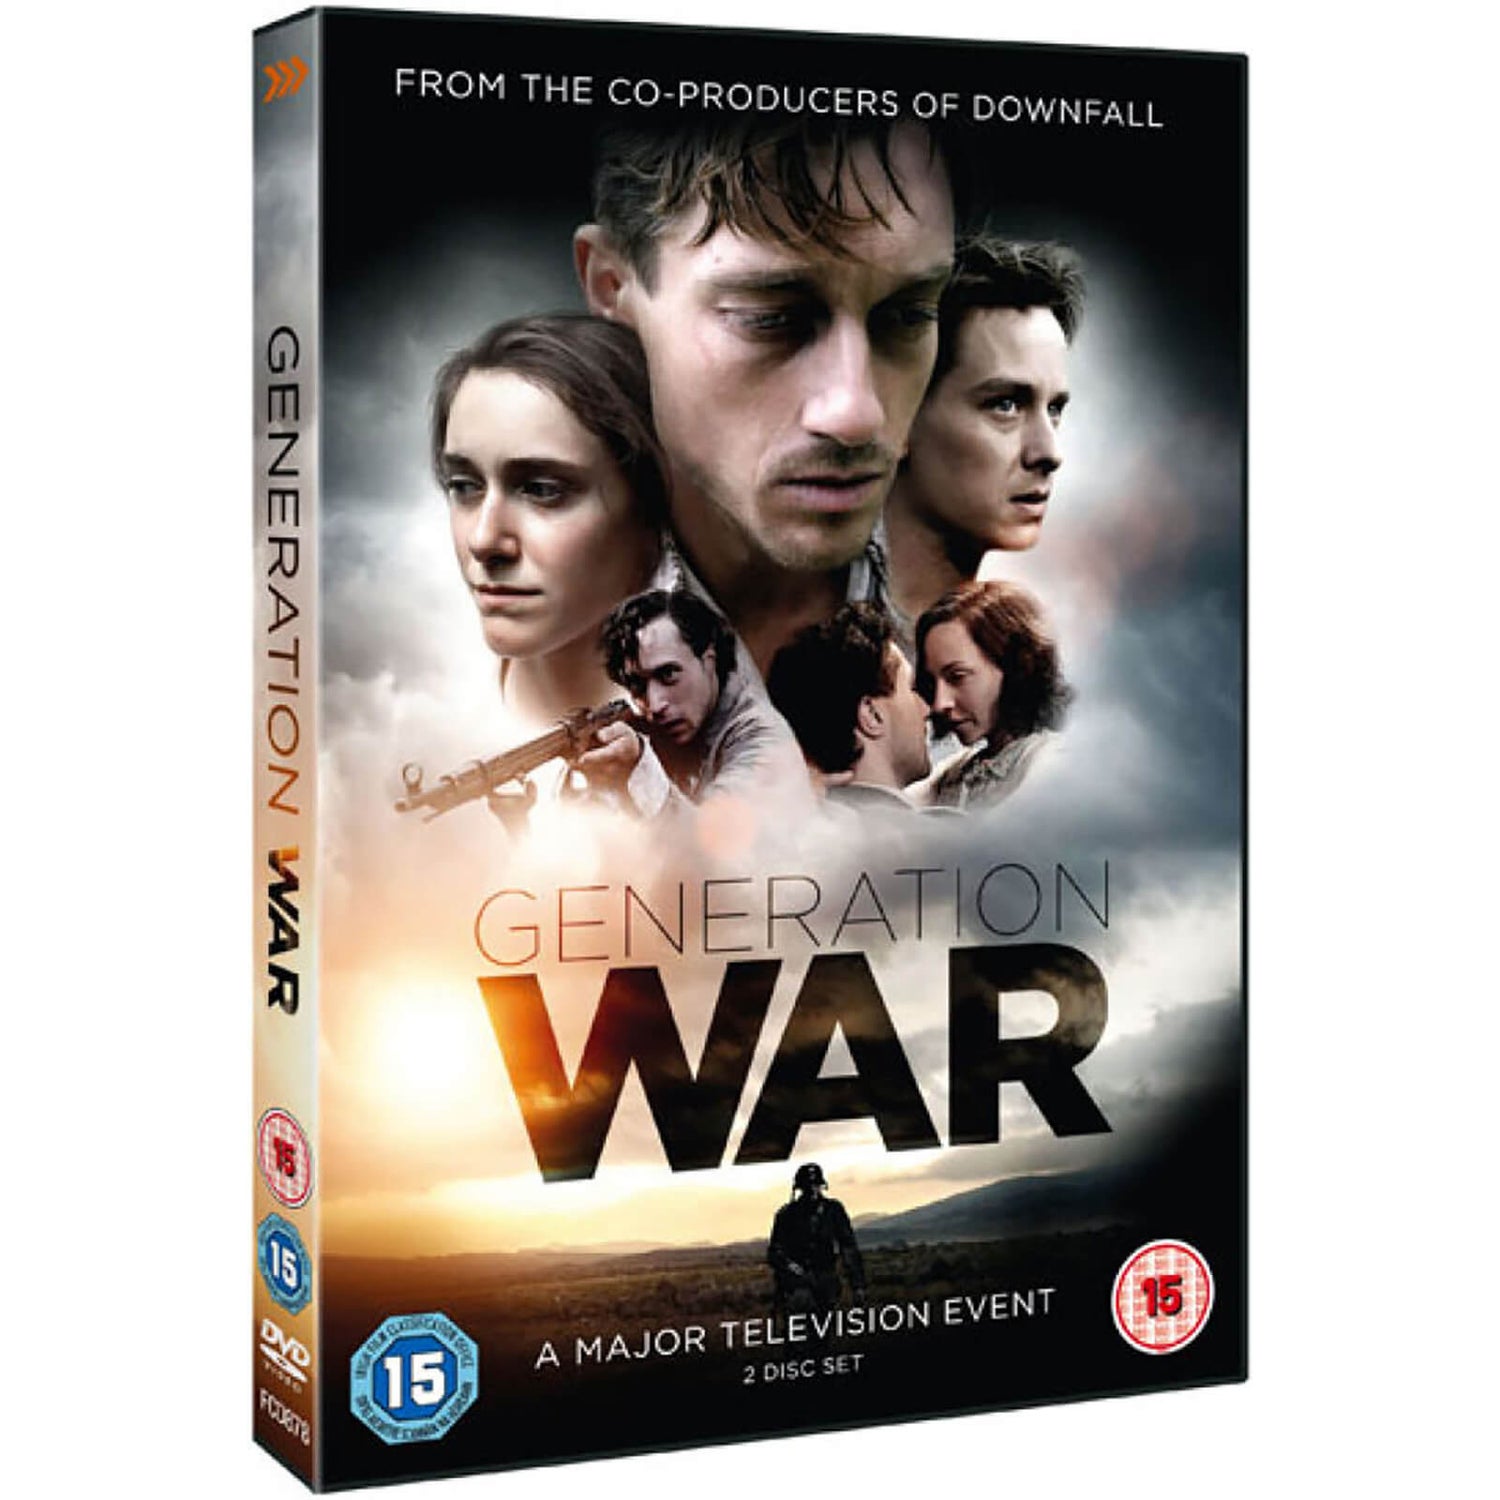 Generation War DVD